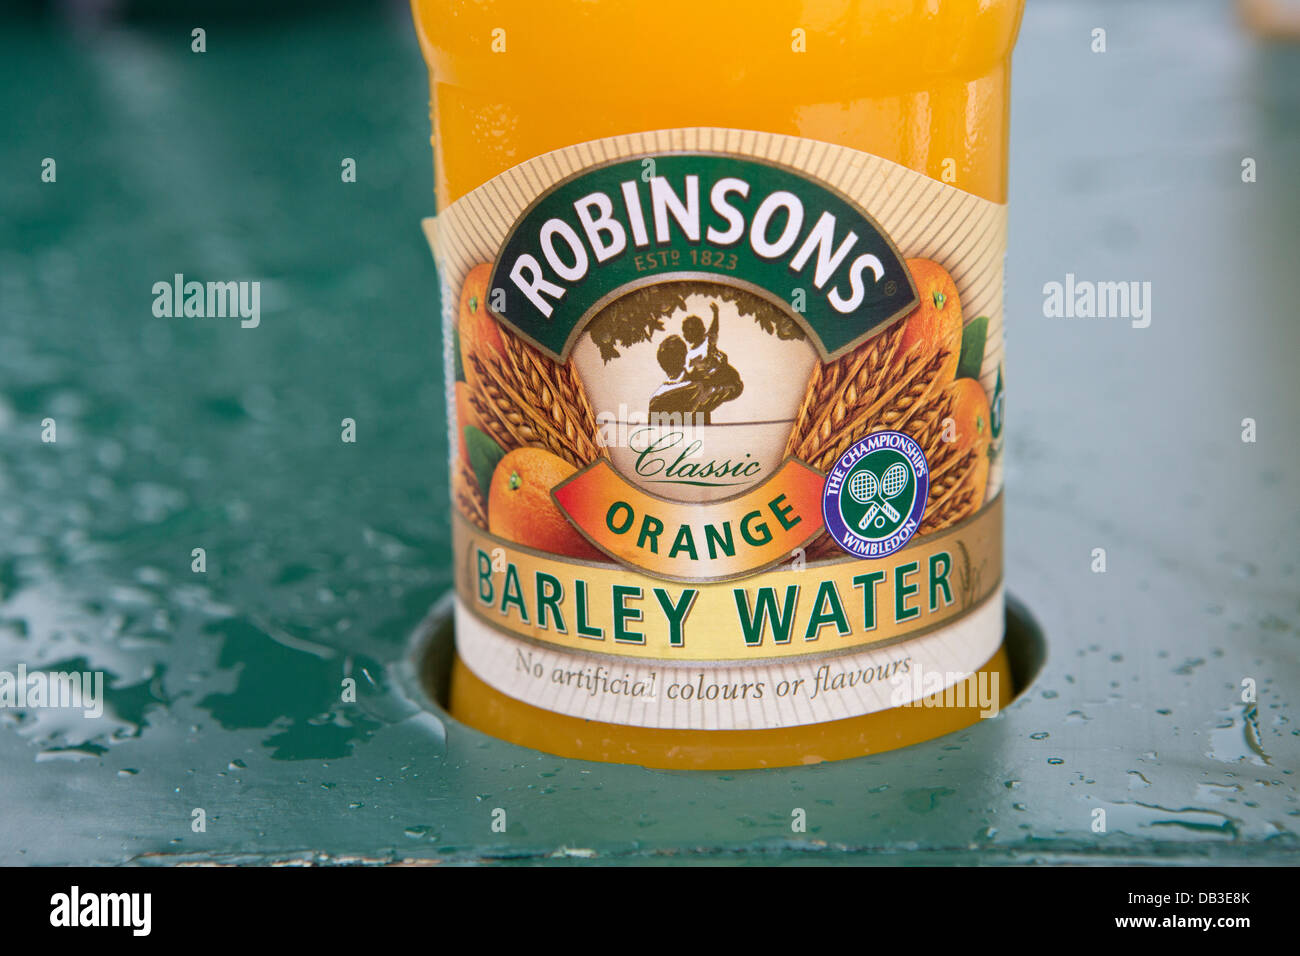 Robinsons barley water bottle Stock Photo